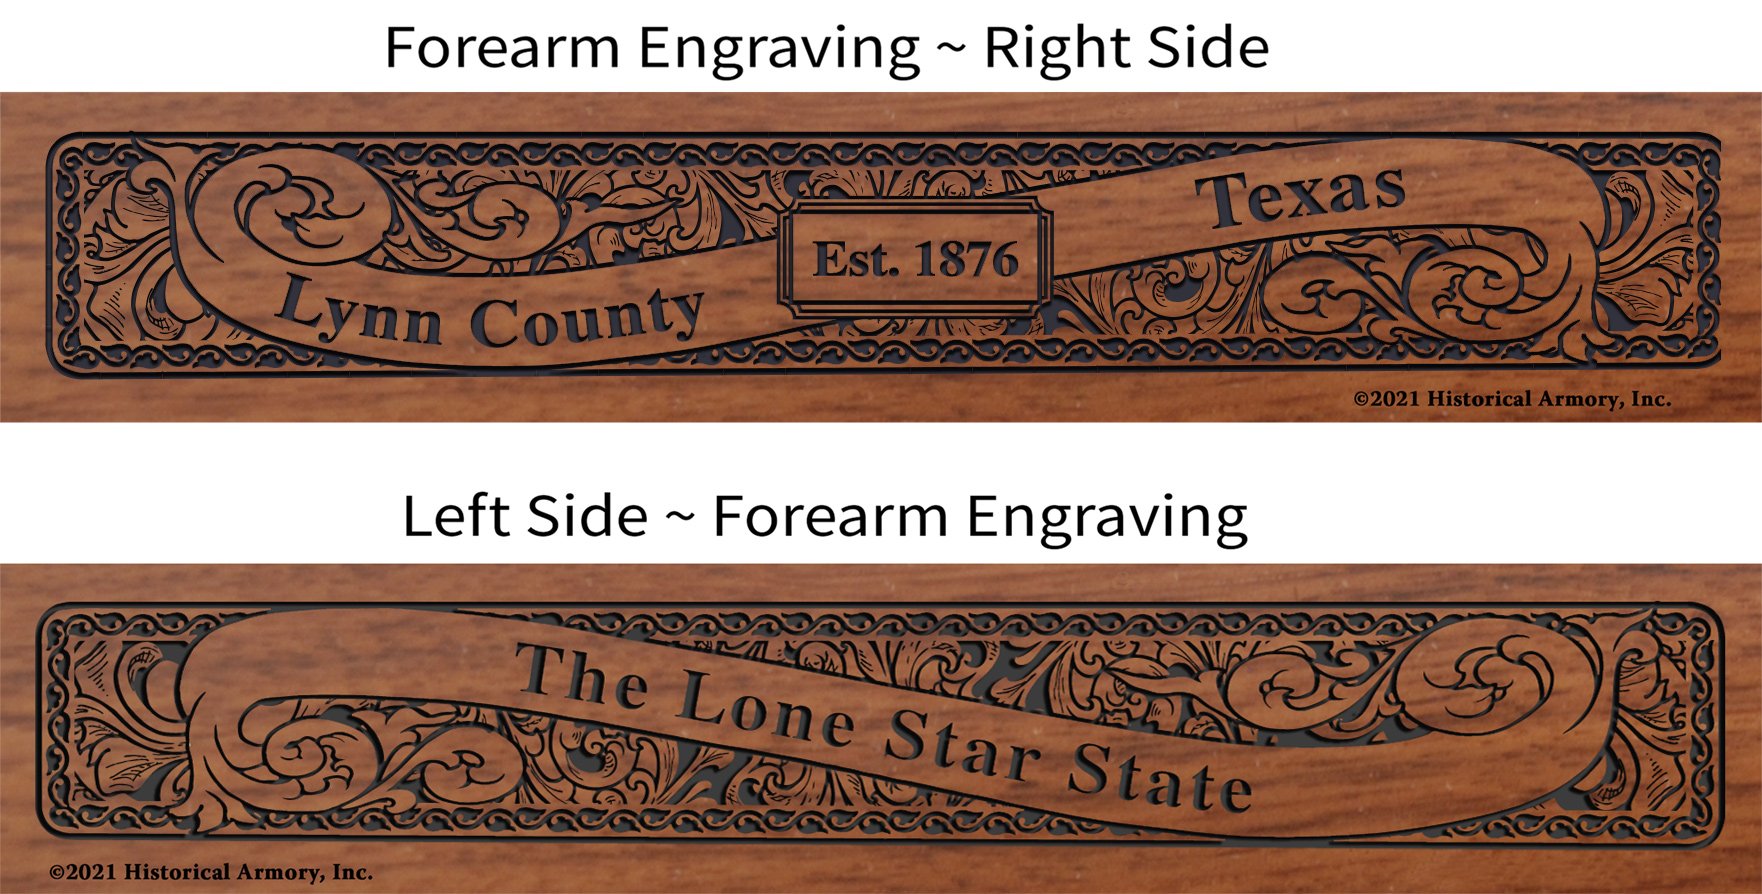 Lynn County Texas Establishment and Motto History Engraved Rifle Forearm